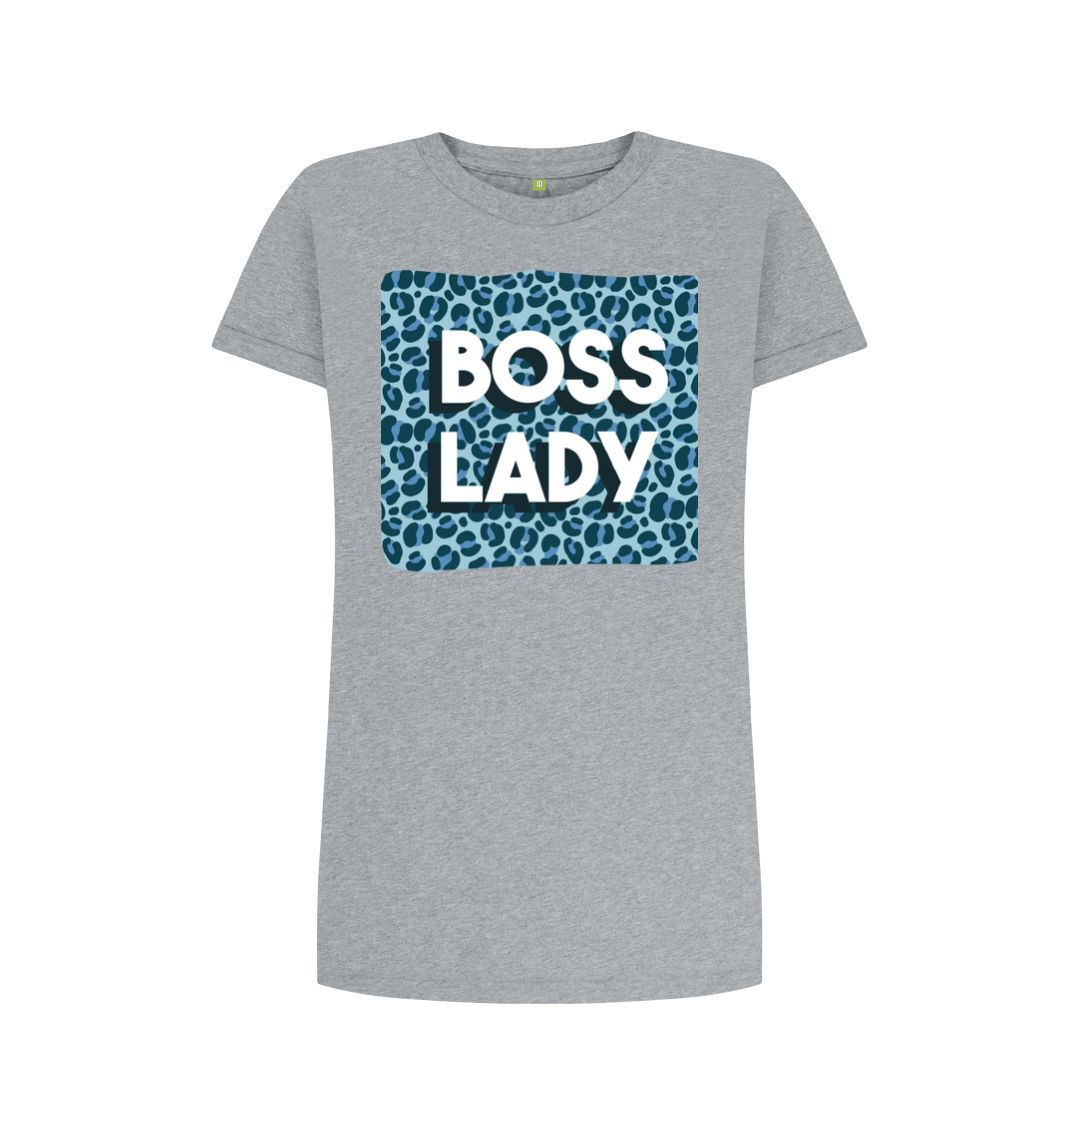 Athletic Grey Boss Lady Women's T-Shirt Dress